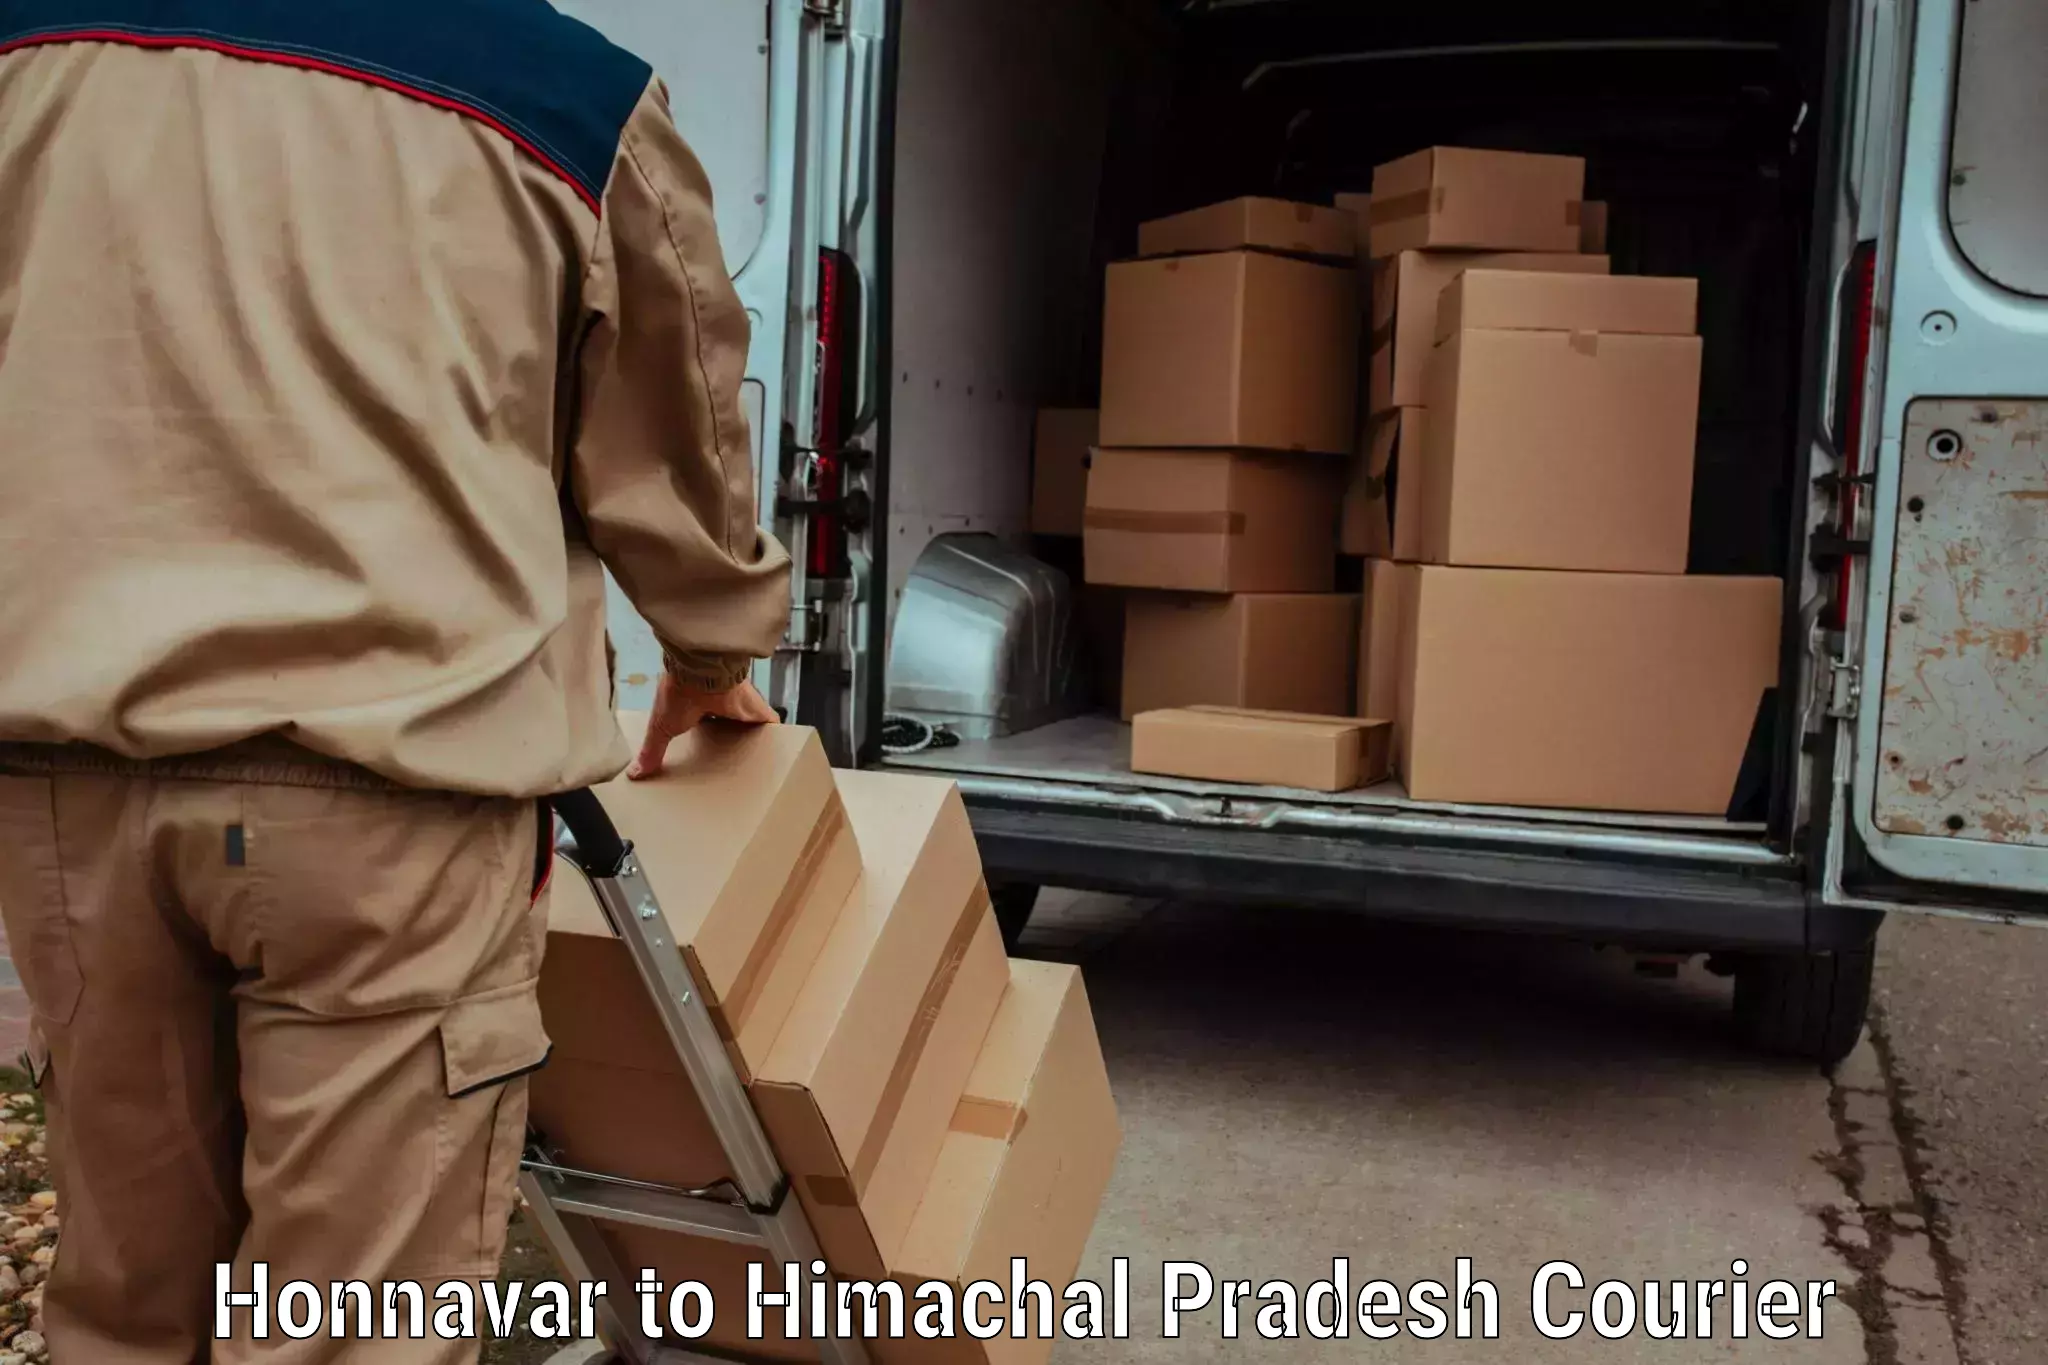 Advanced shipping network Honnavar to Manali